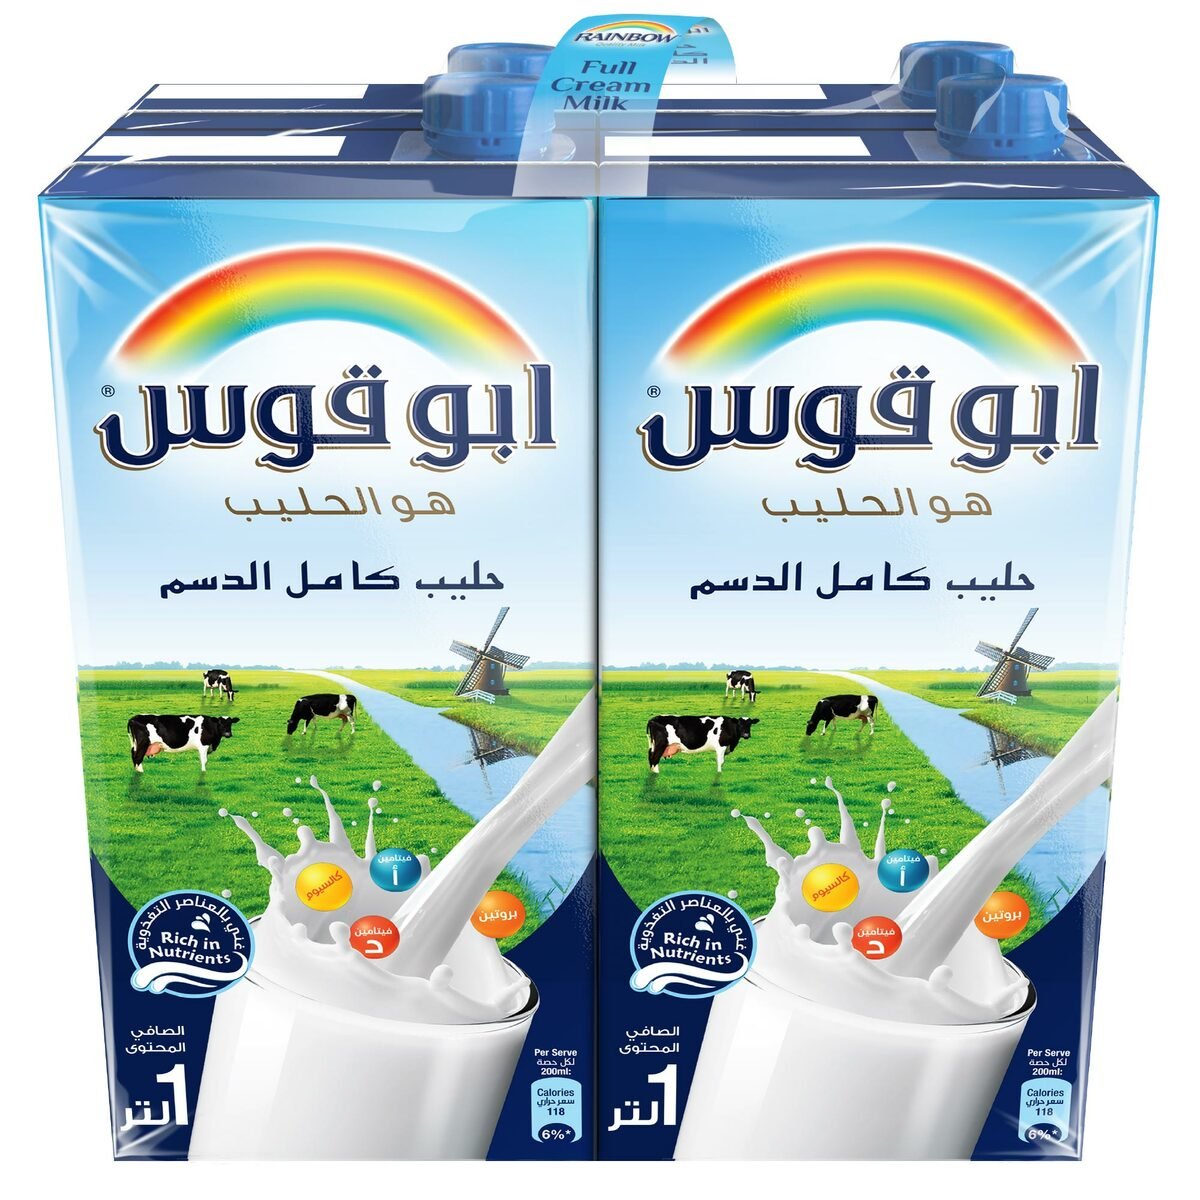 Rainbow Full Cream UHT Milk 4 x 1 Litre